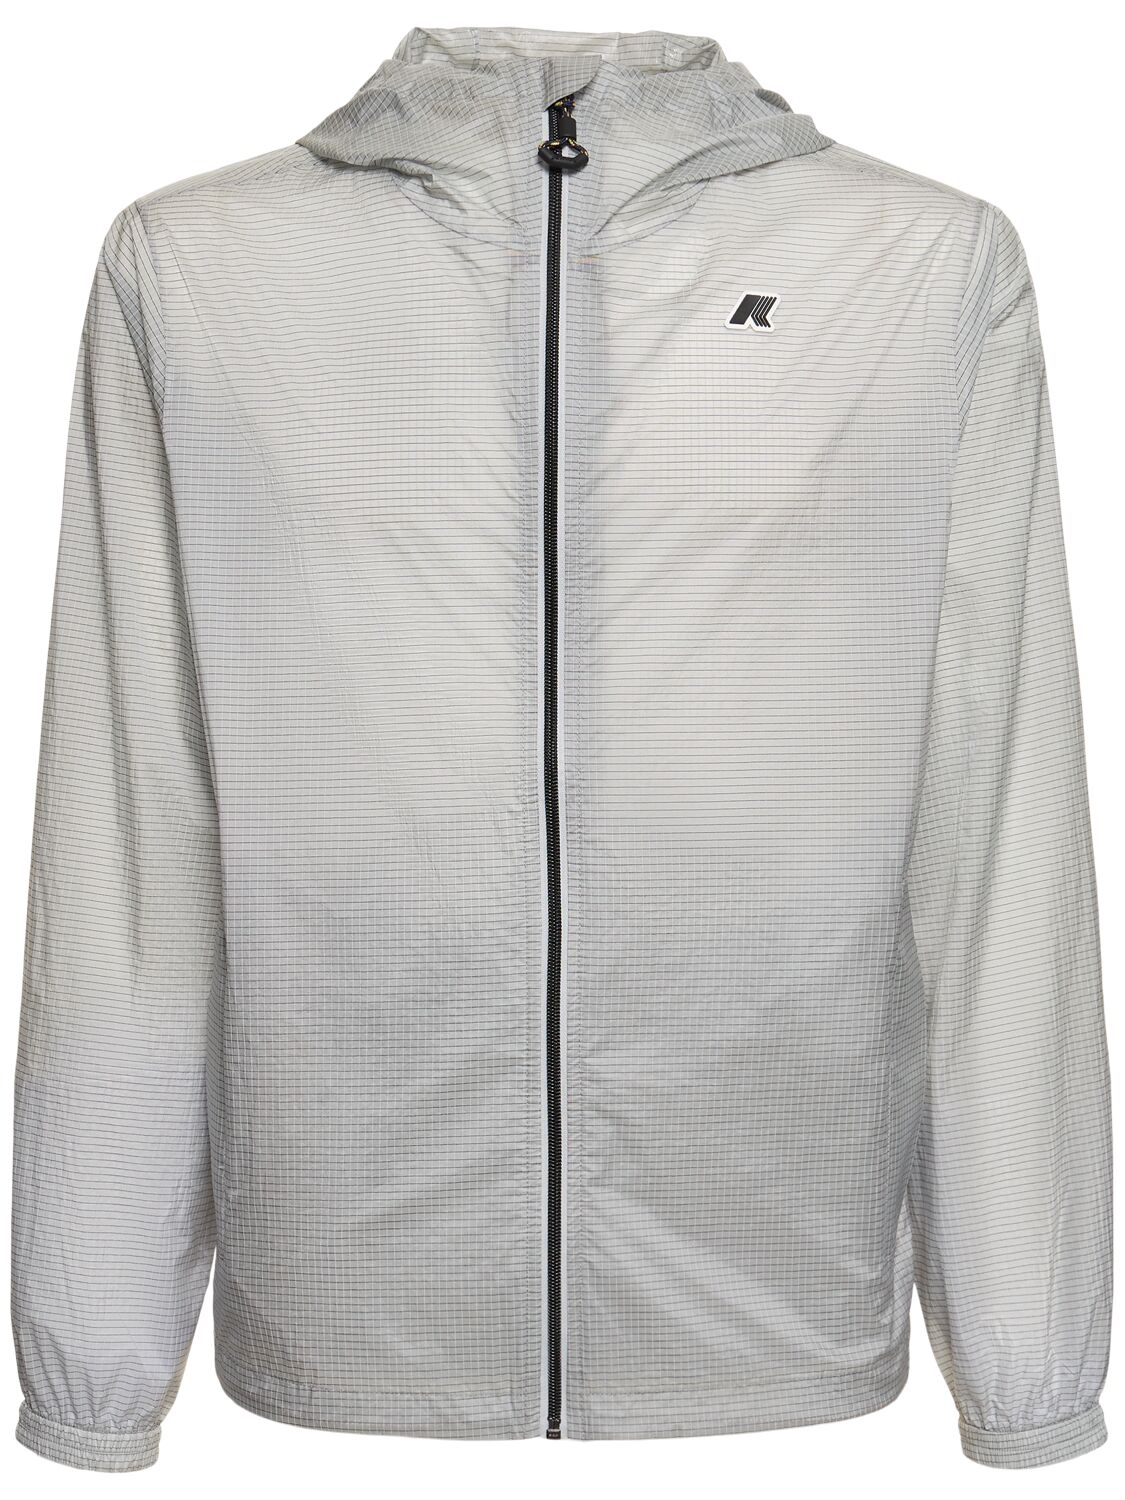 K-way Cleon Ripstop Jacket In Grey Ash